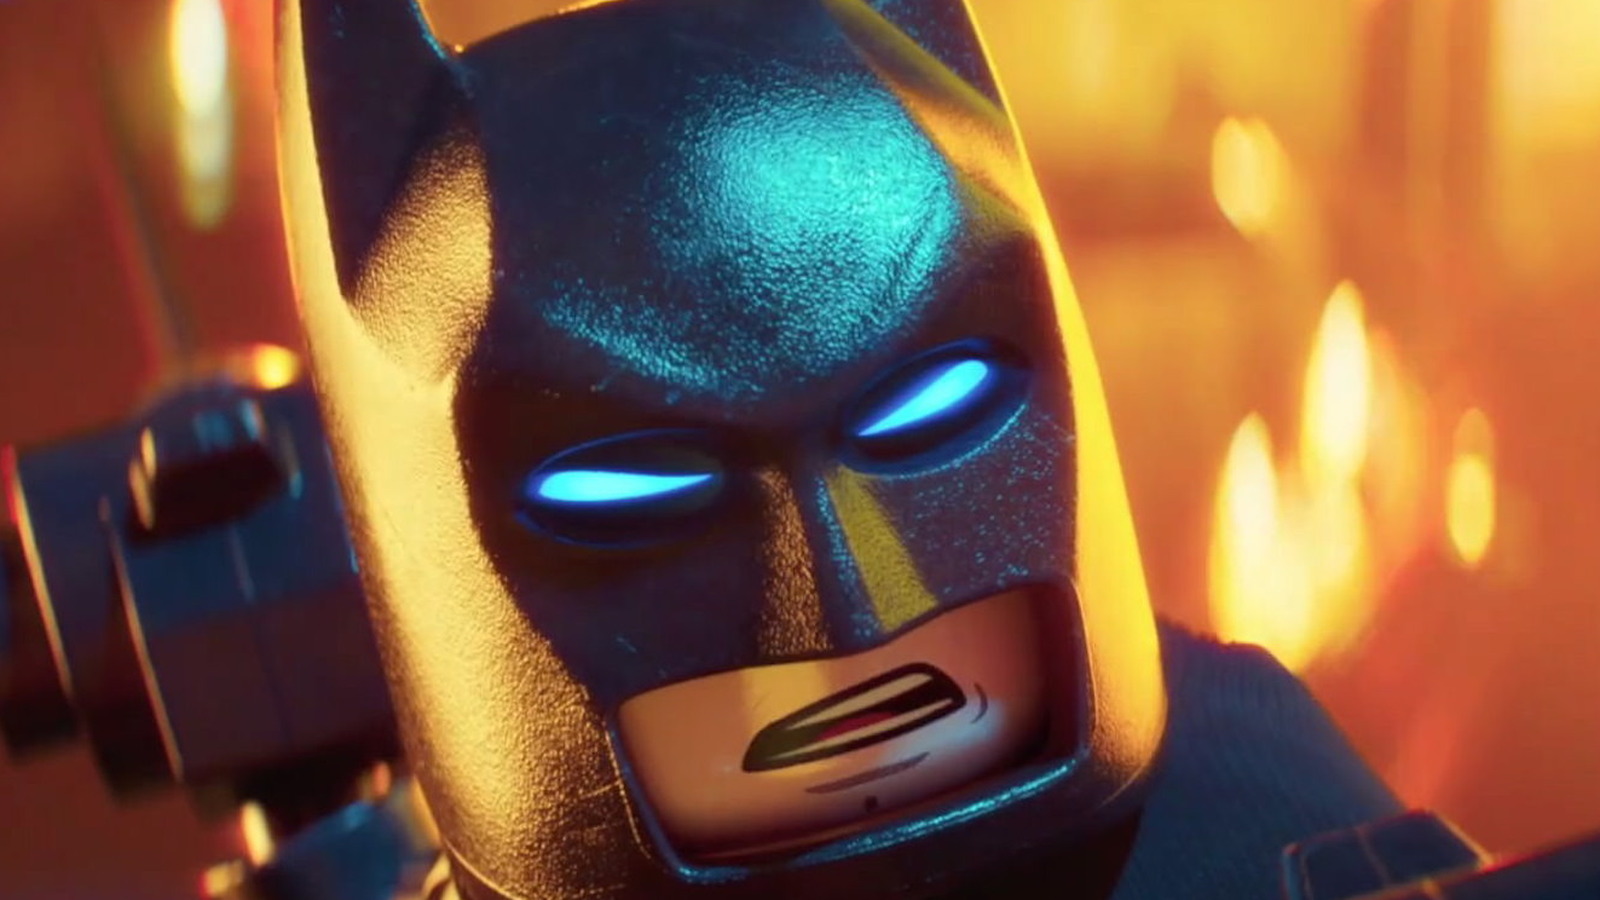 Chris McKay “working on” The LEGO Batman Movie 2